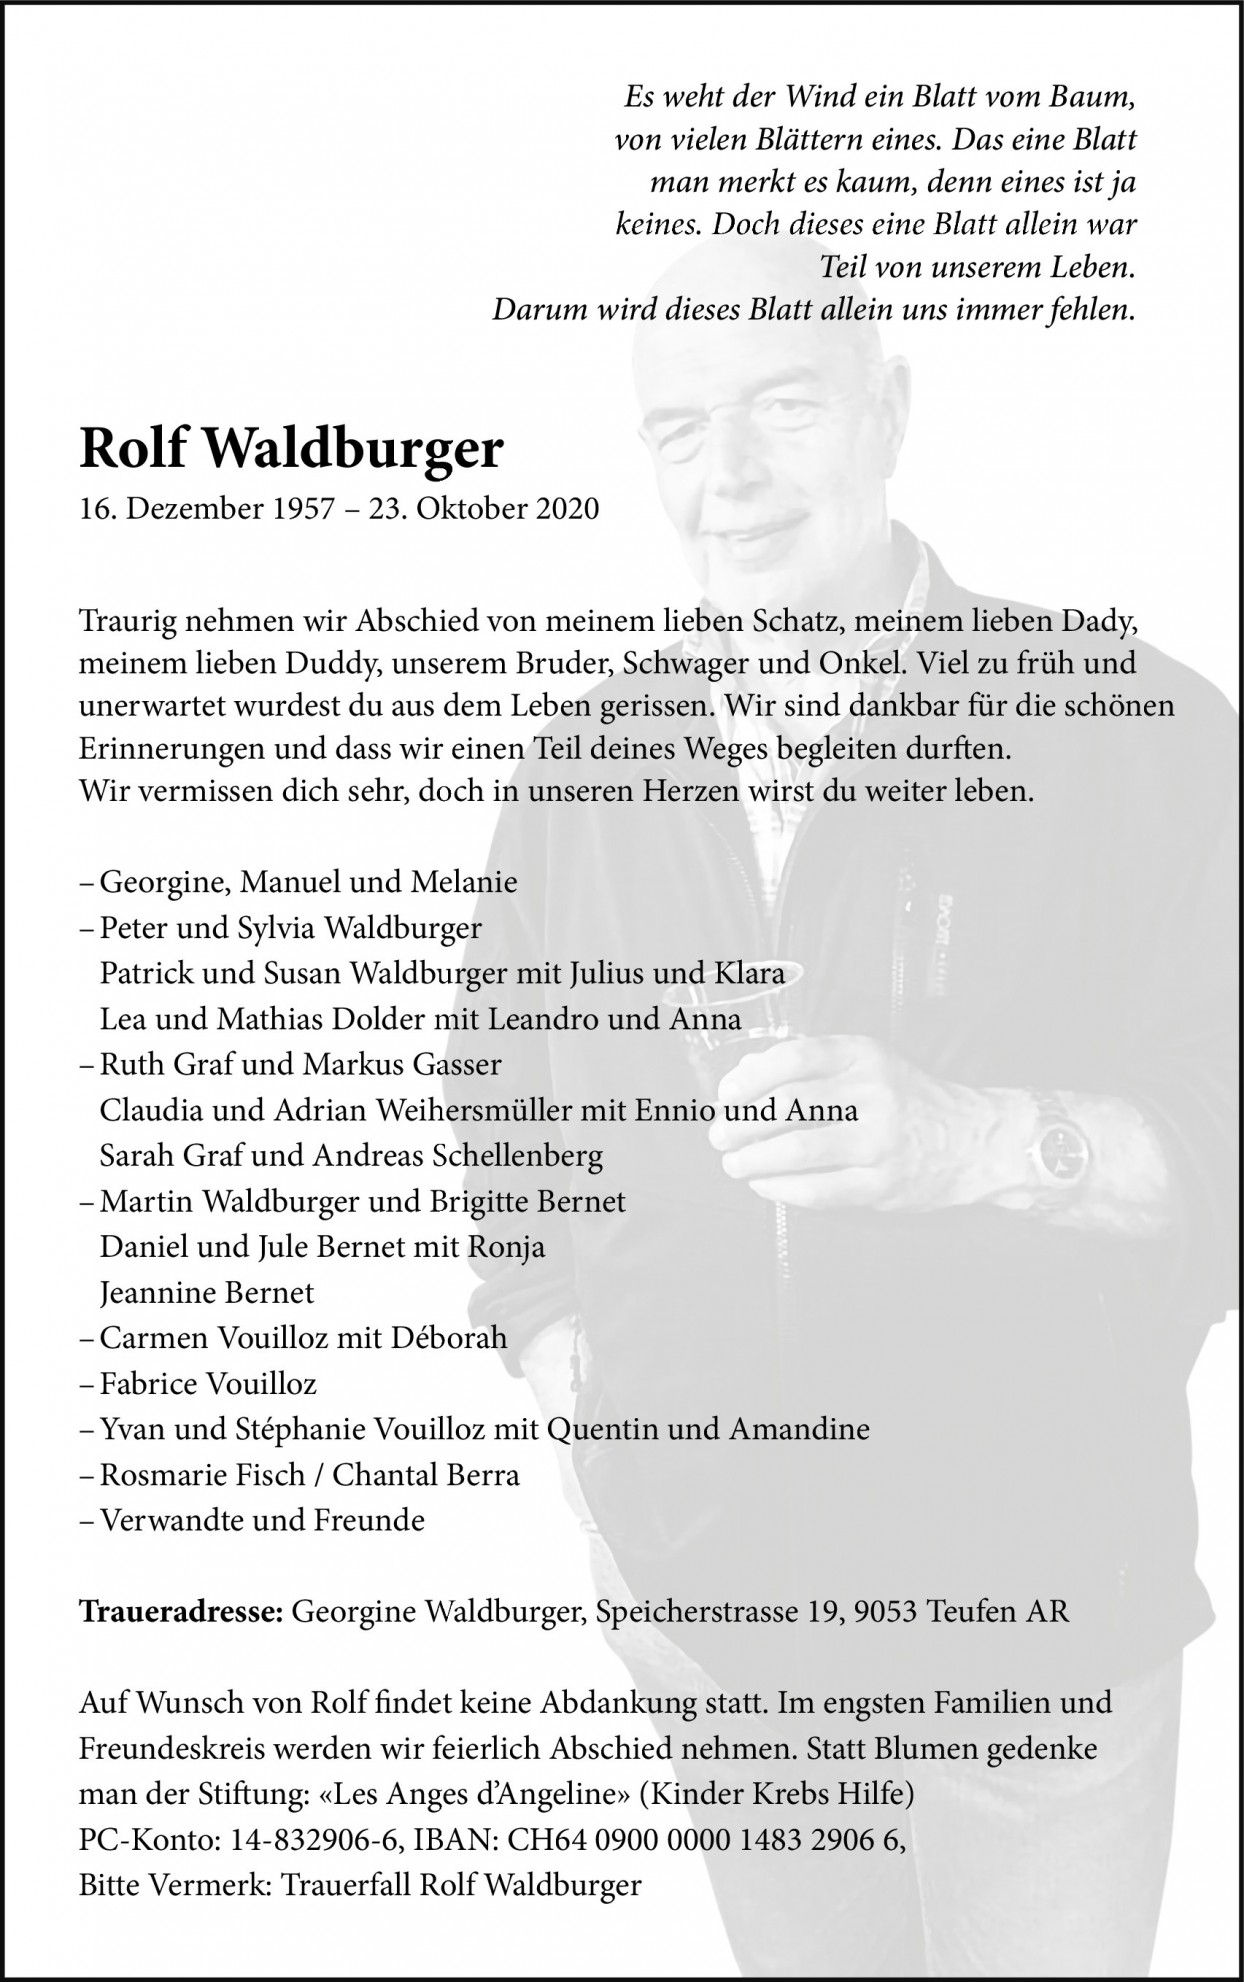 Rolf Waldburger